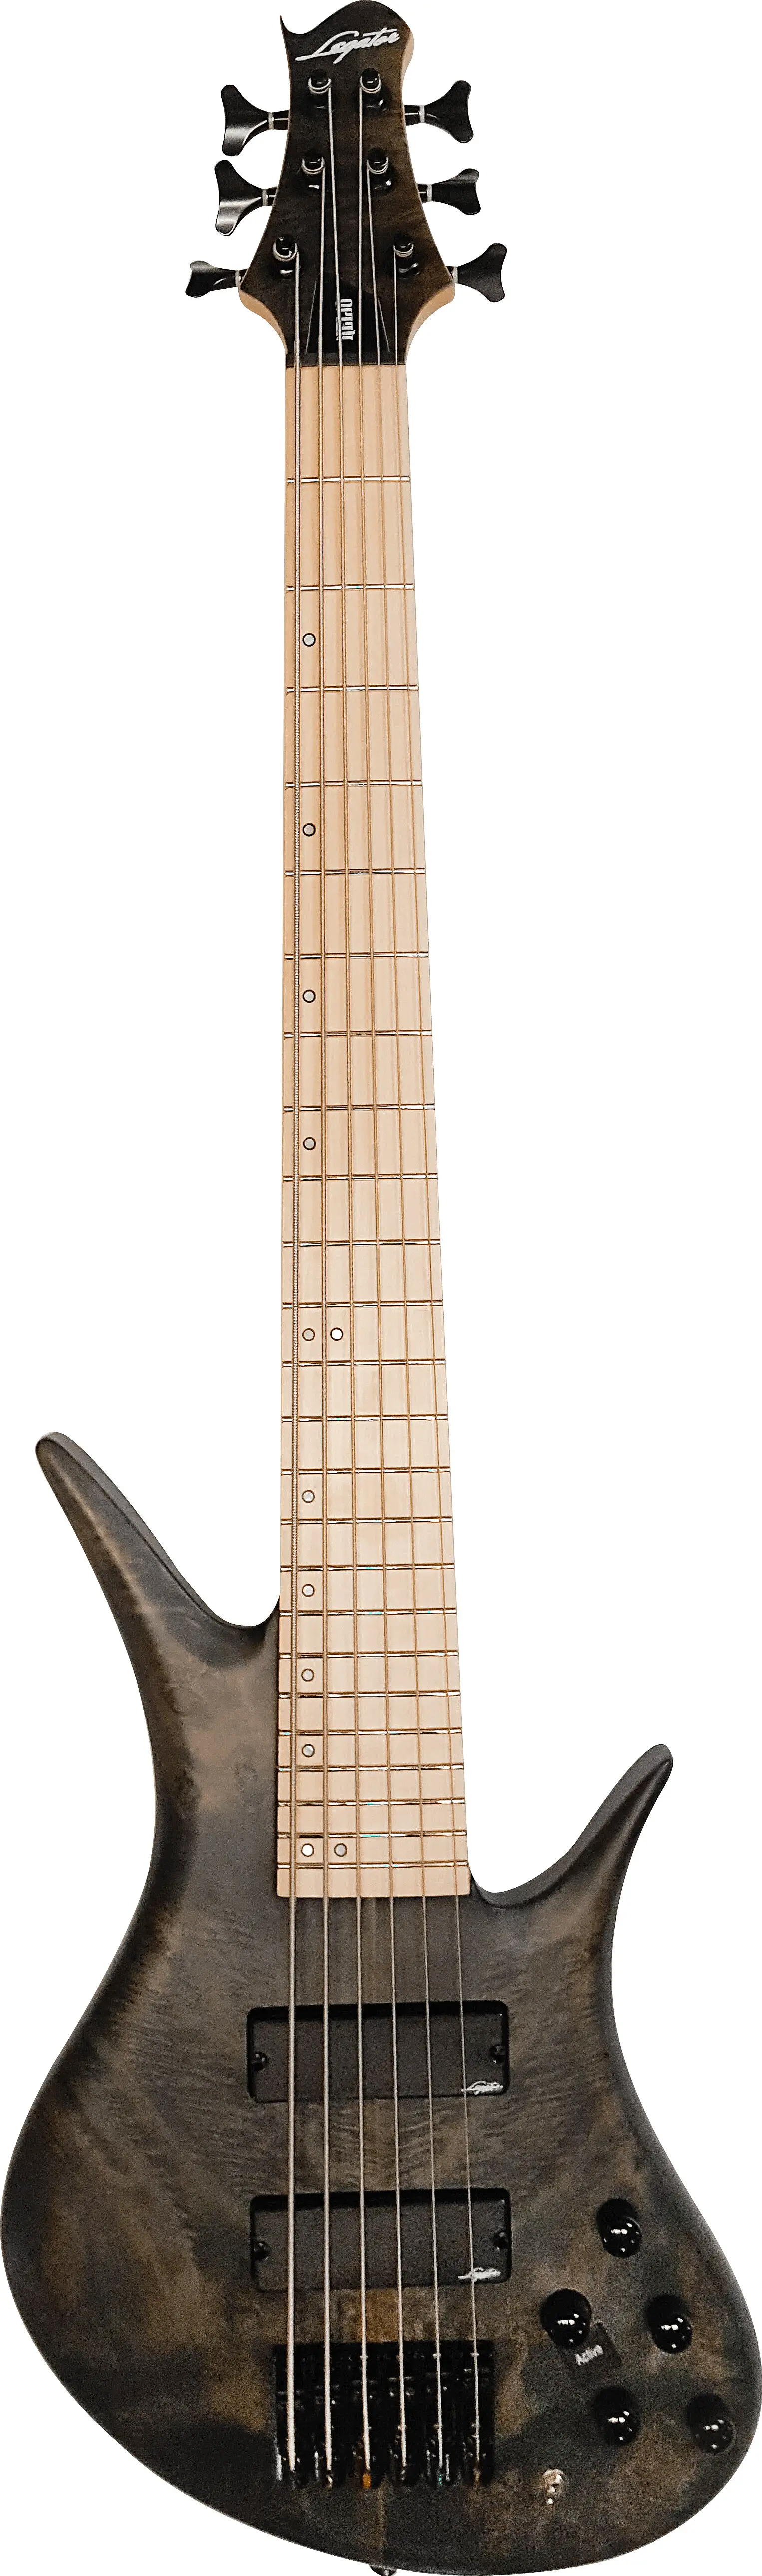 2018 Helio Bass 300-PRO X Series 6-string by Legator Guitars